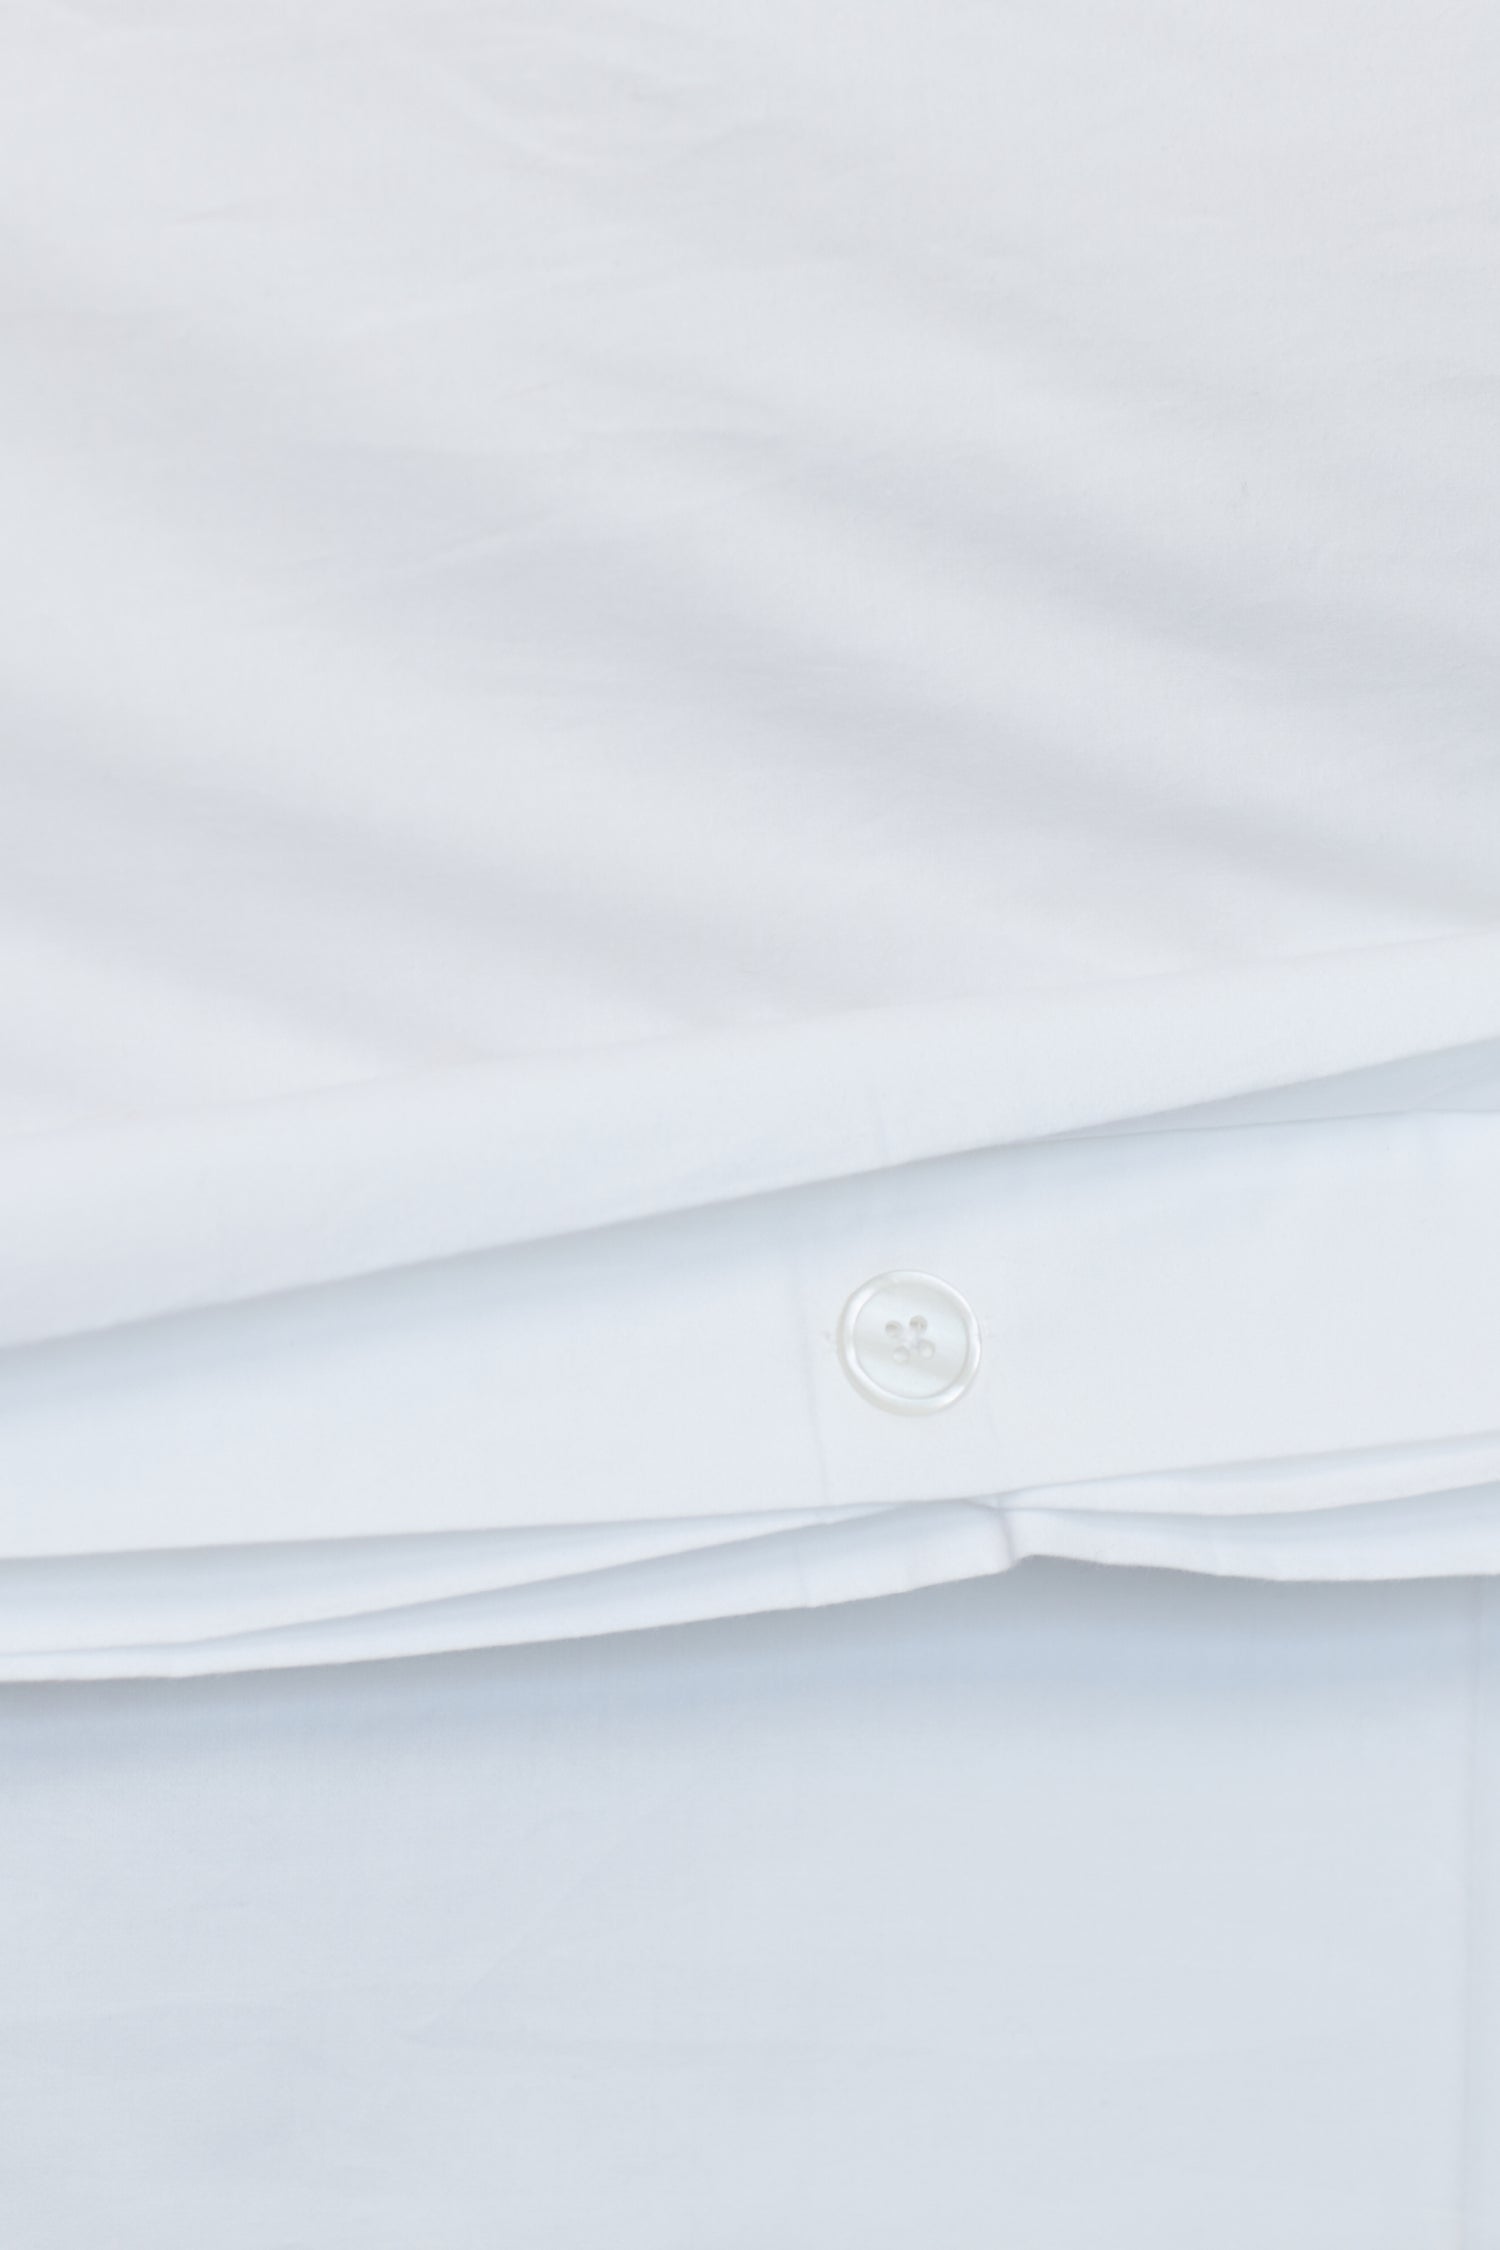 White & Navy Banded Duvet Set  | 100% Organic Certified Cotton